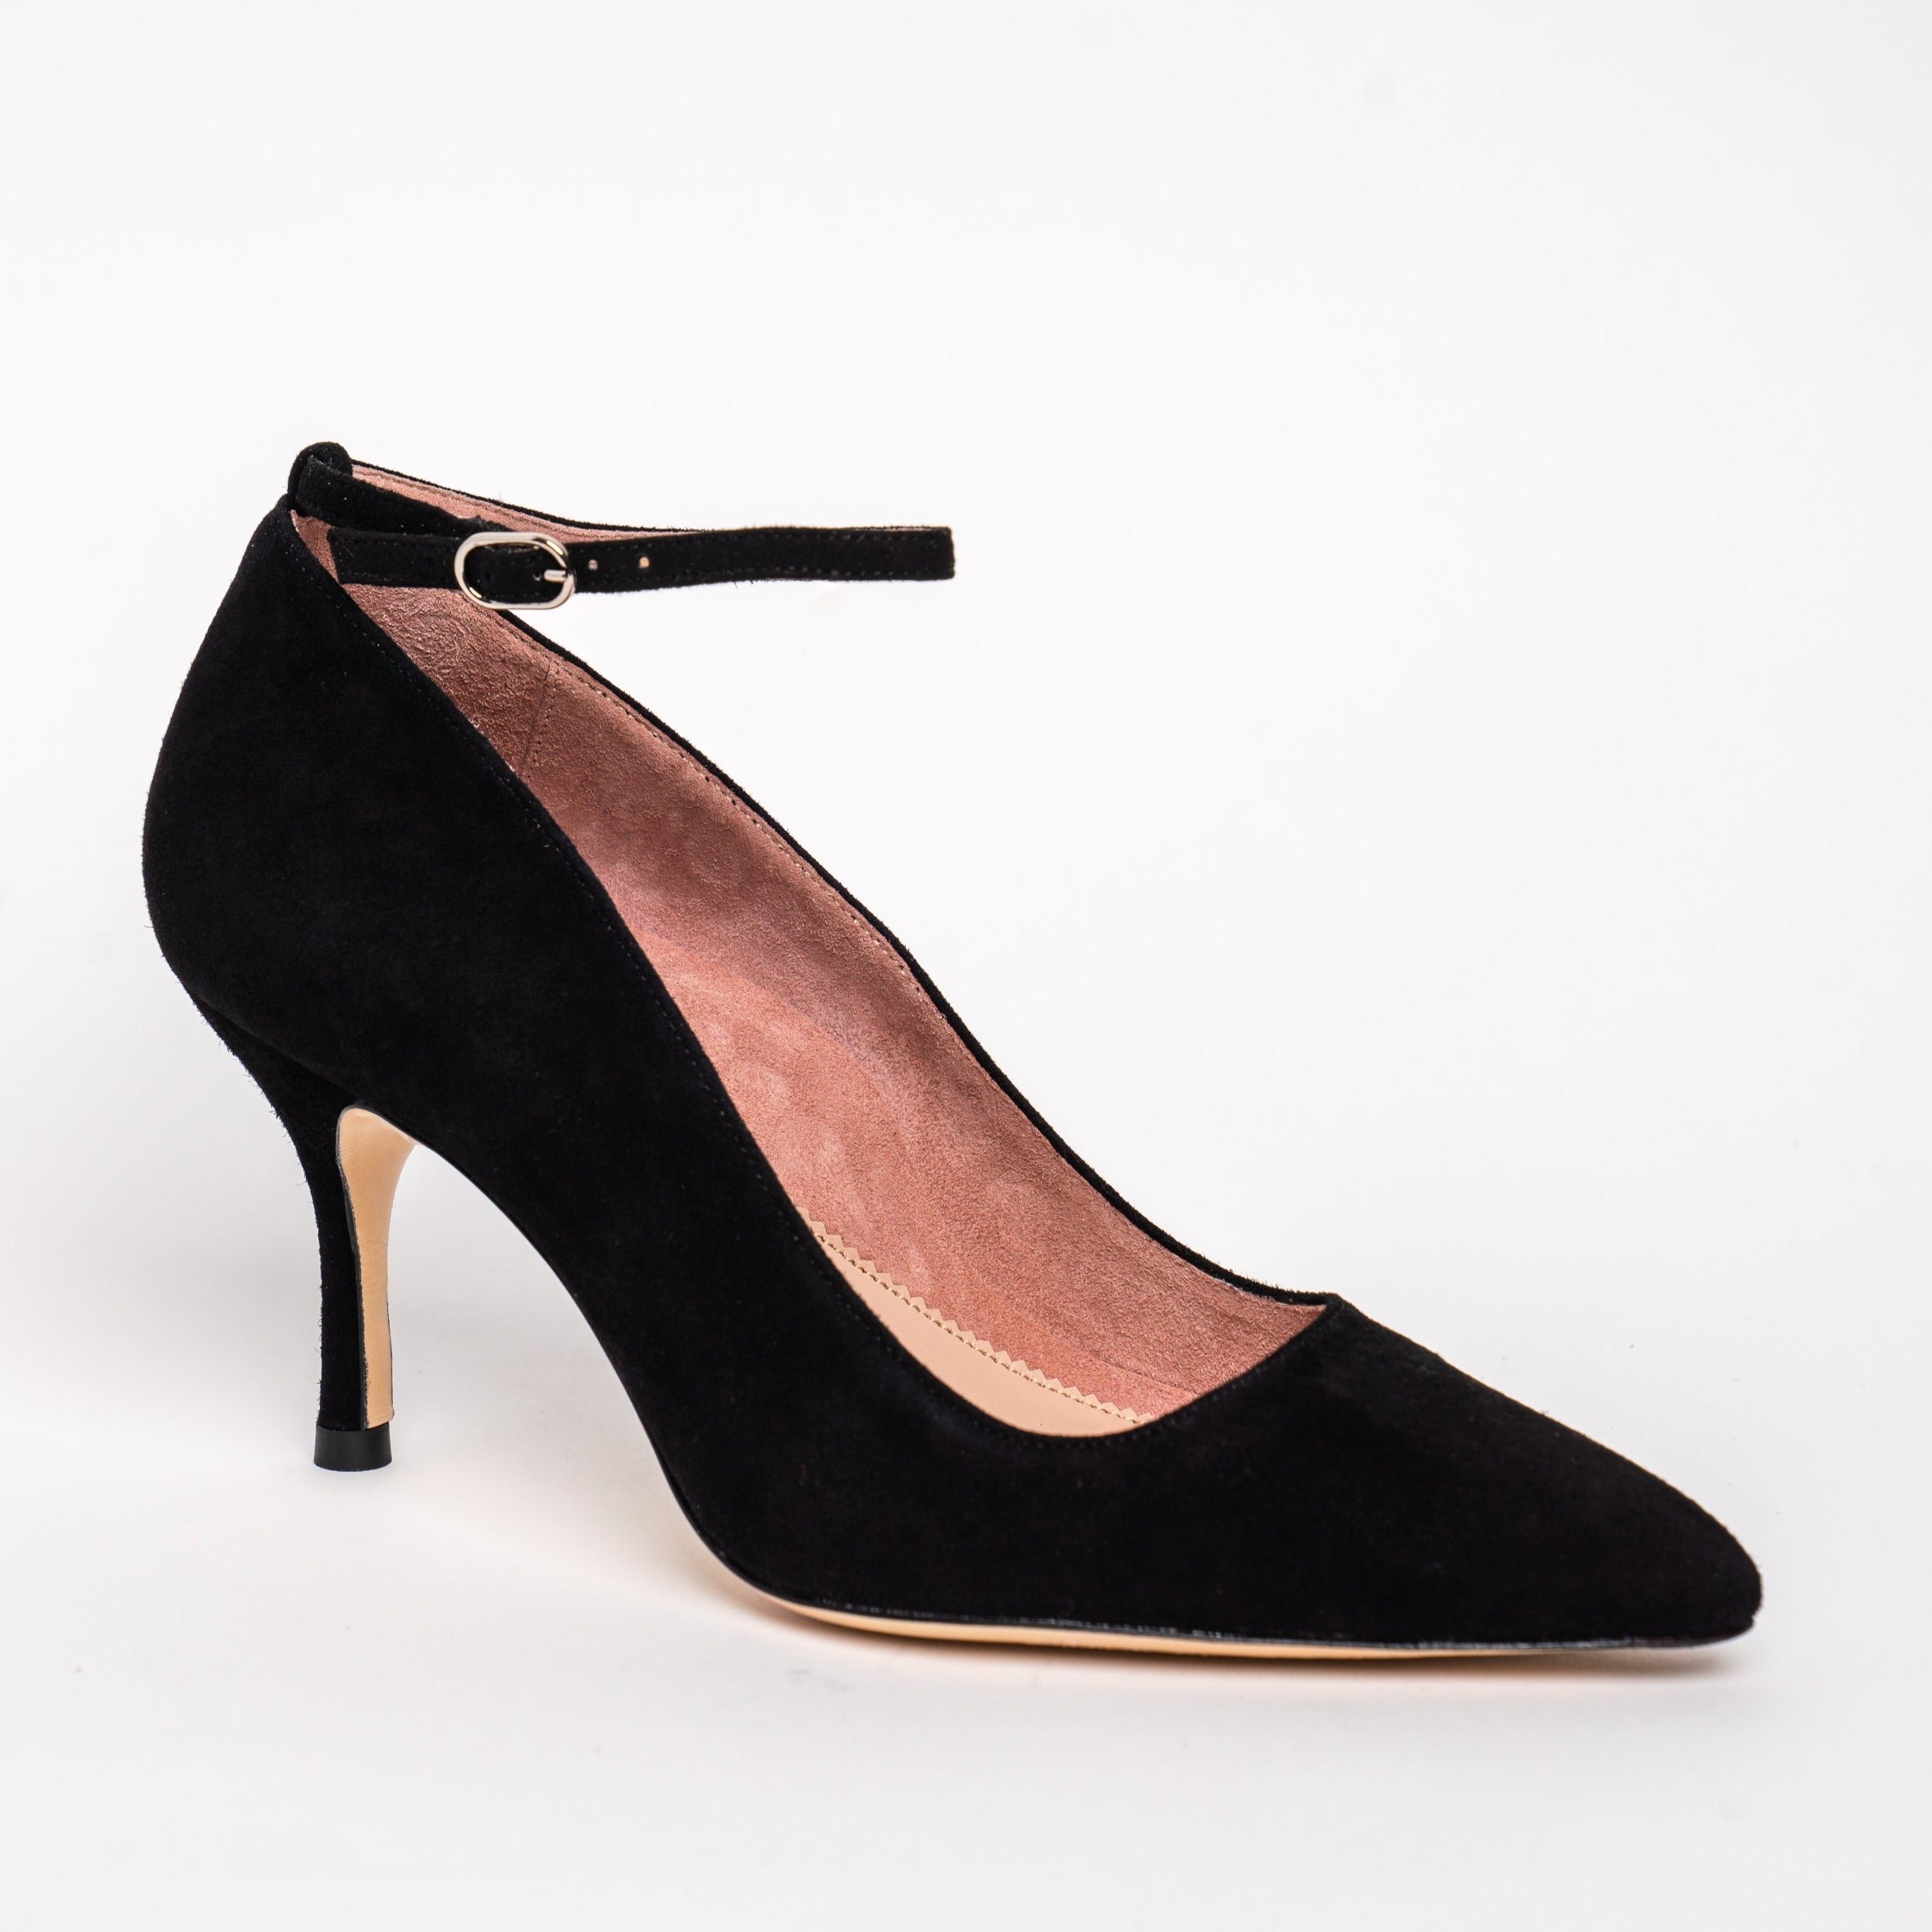 Buy Ravel ladies' Mallow shoes in black online at www.ravel.co.uk.